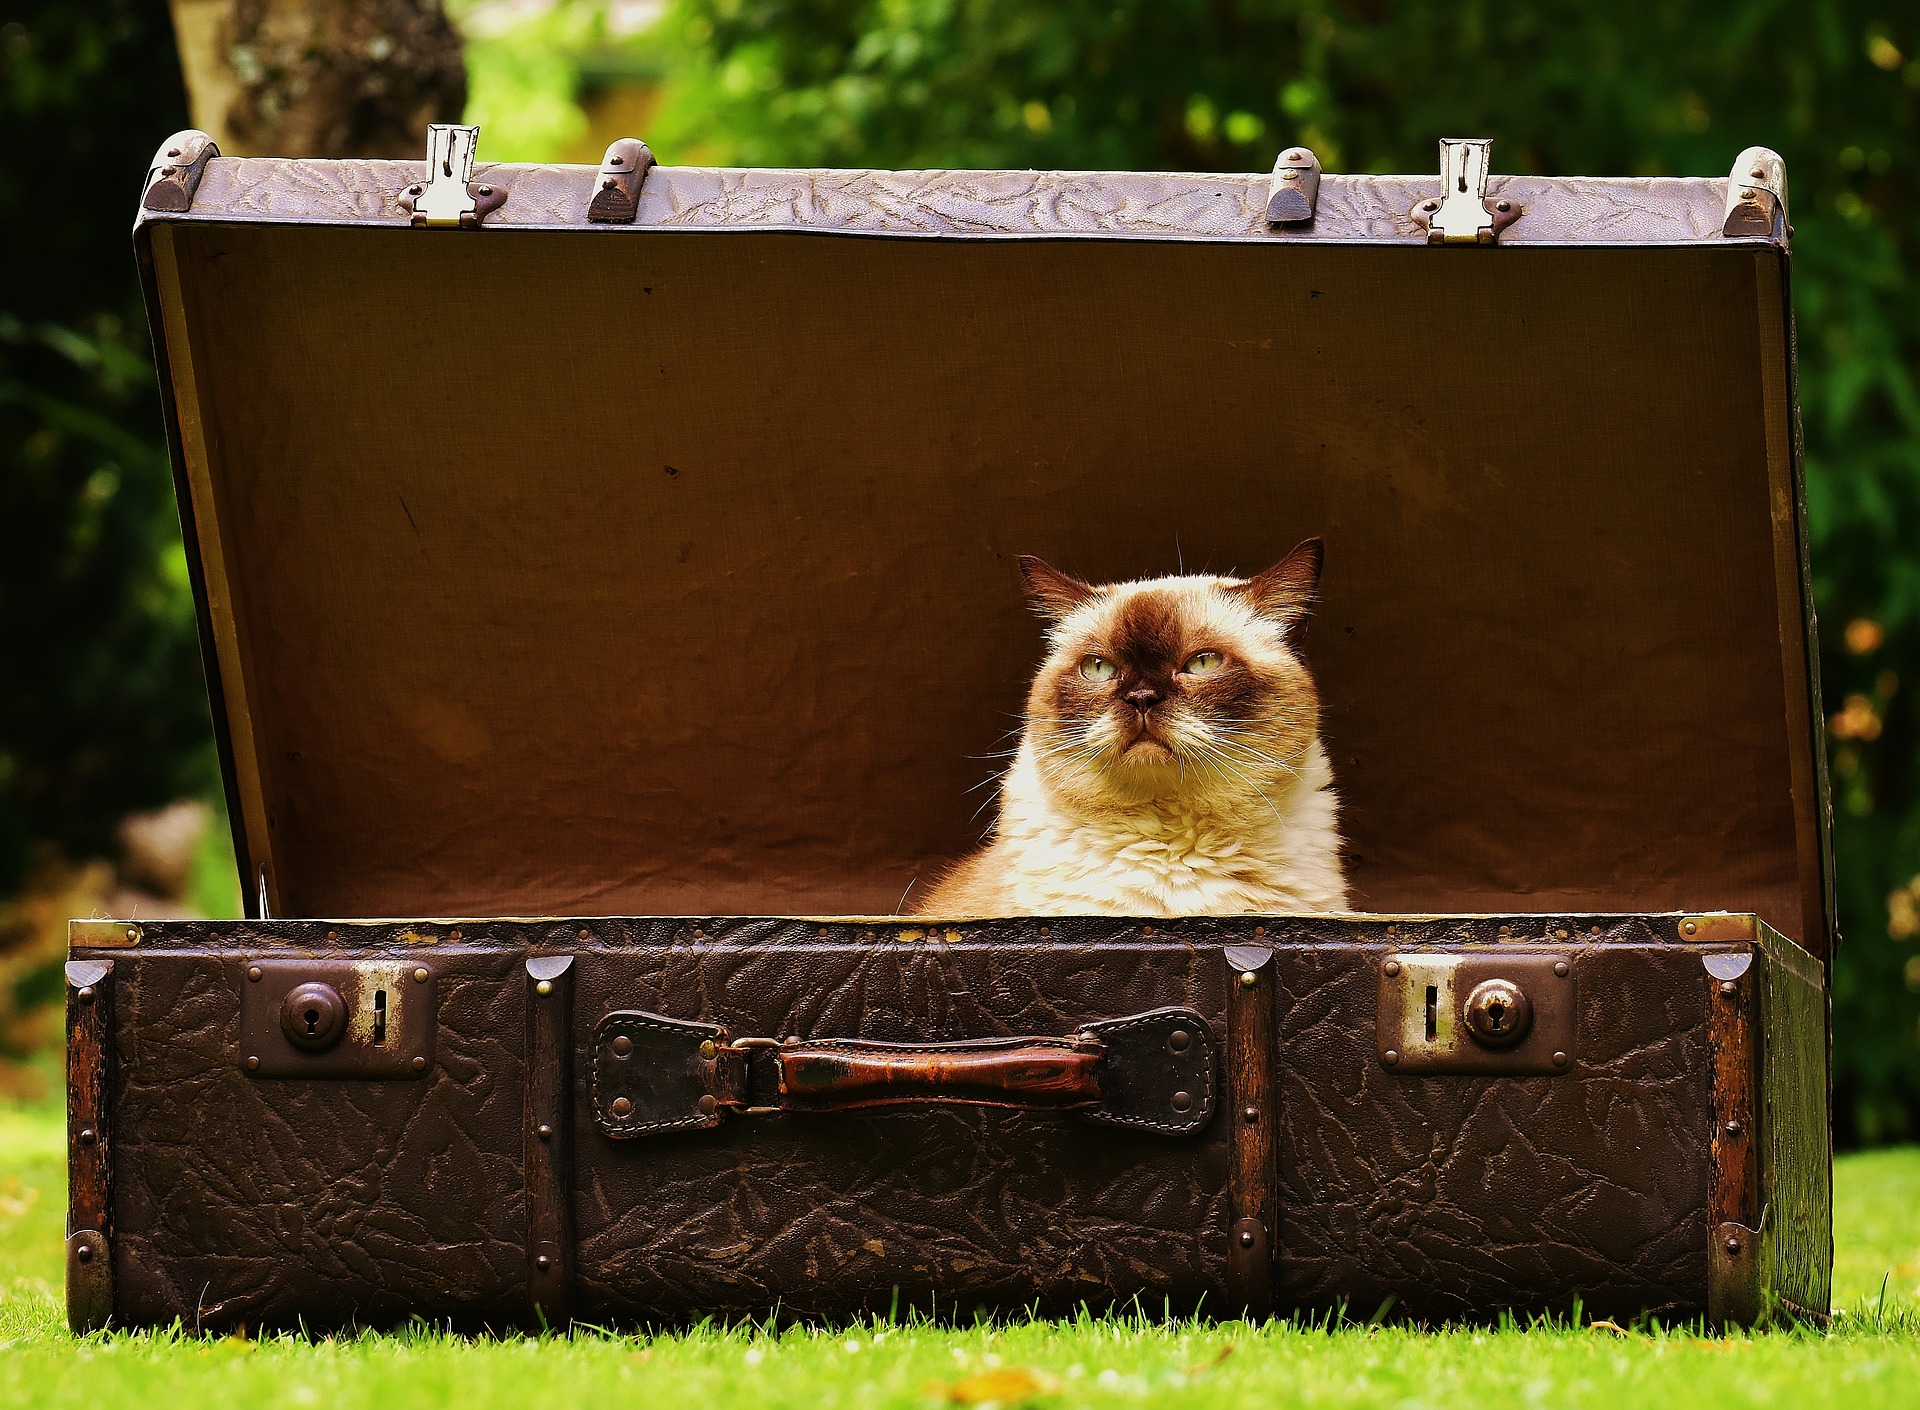 a cat sitting in a suitcase